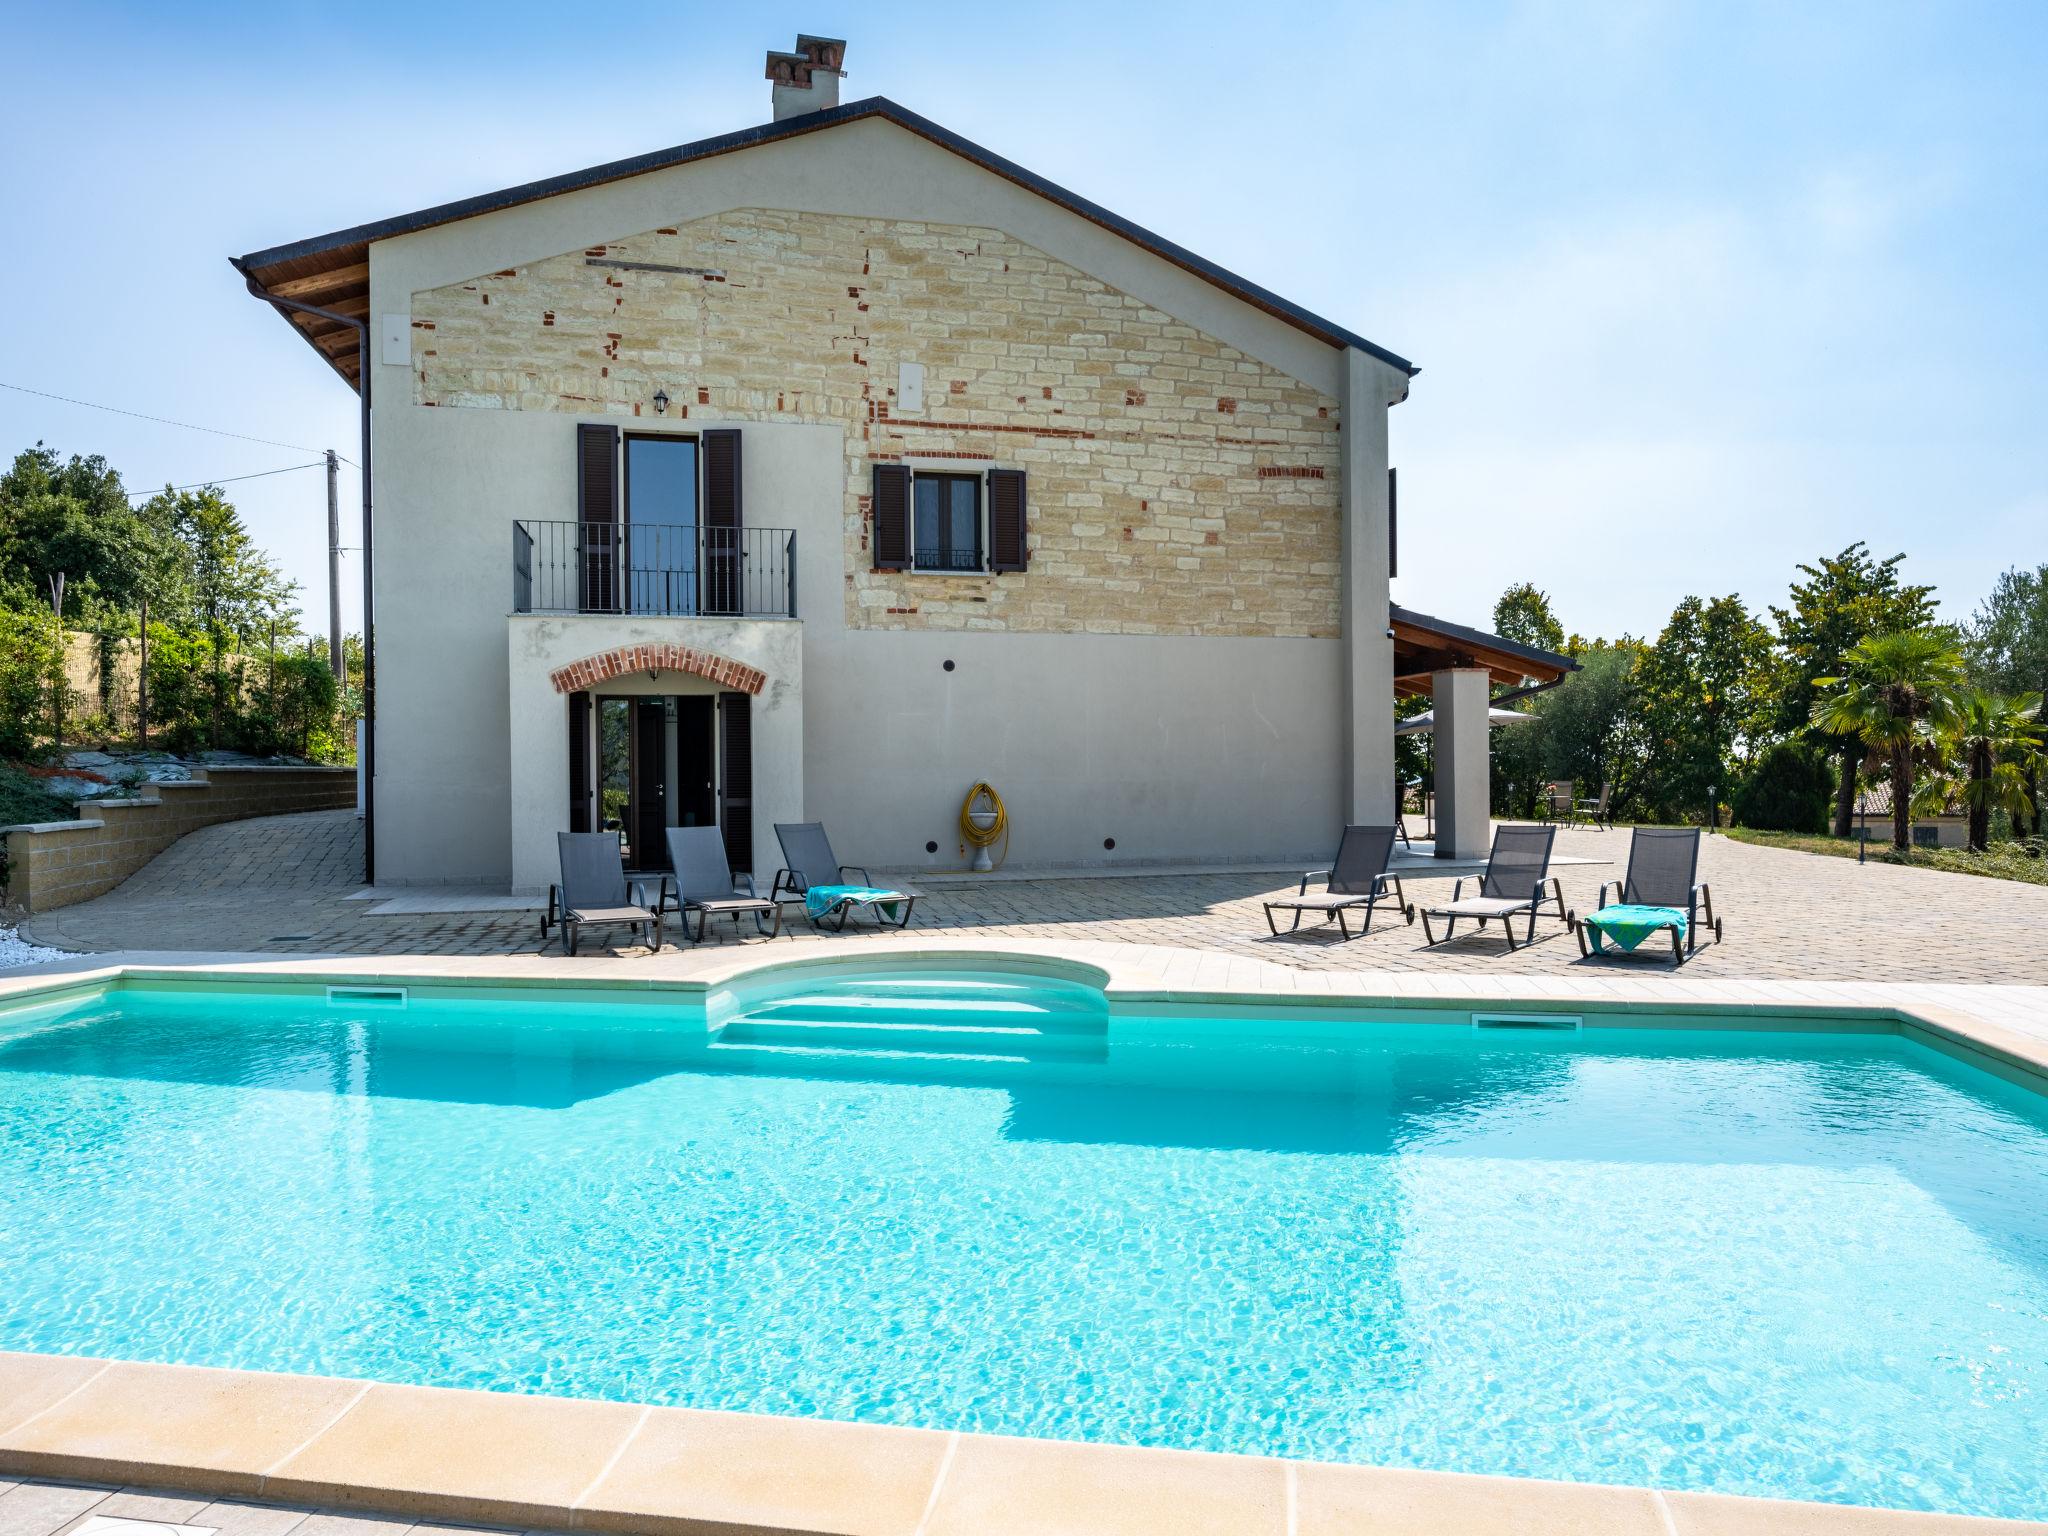 Photo 1 - 7 bedroom House in Ponzano Monferrato with private pool and garden